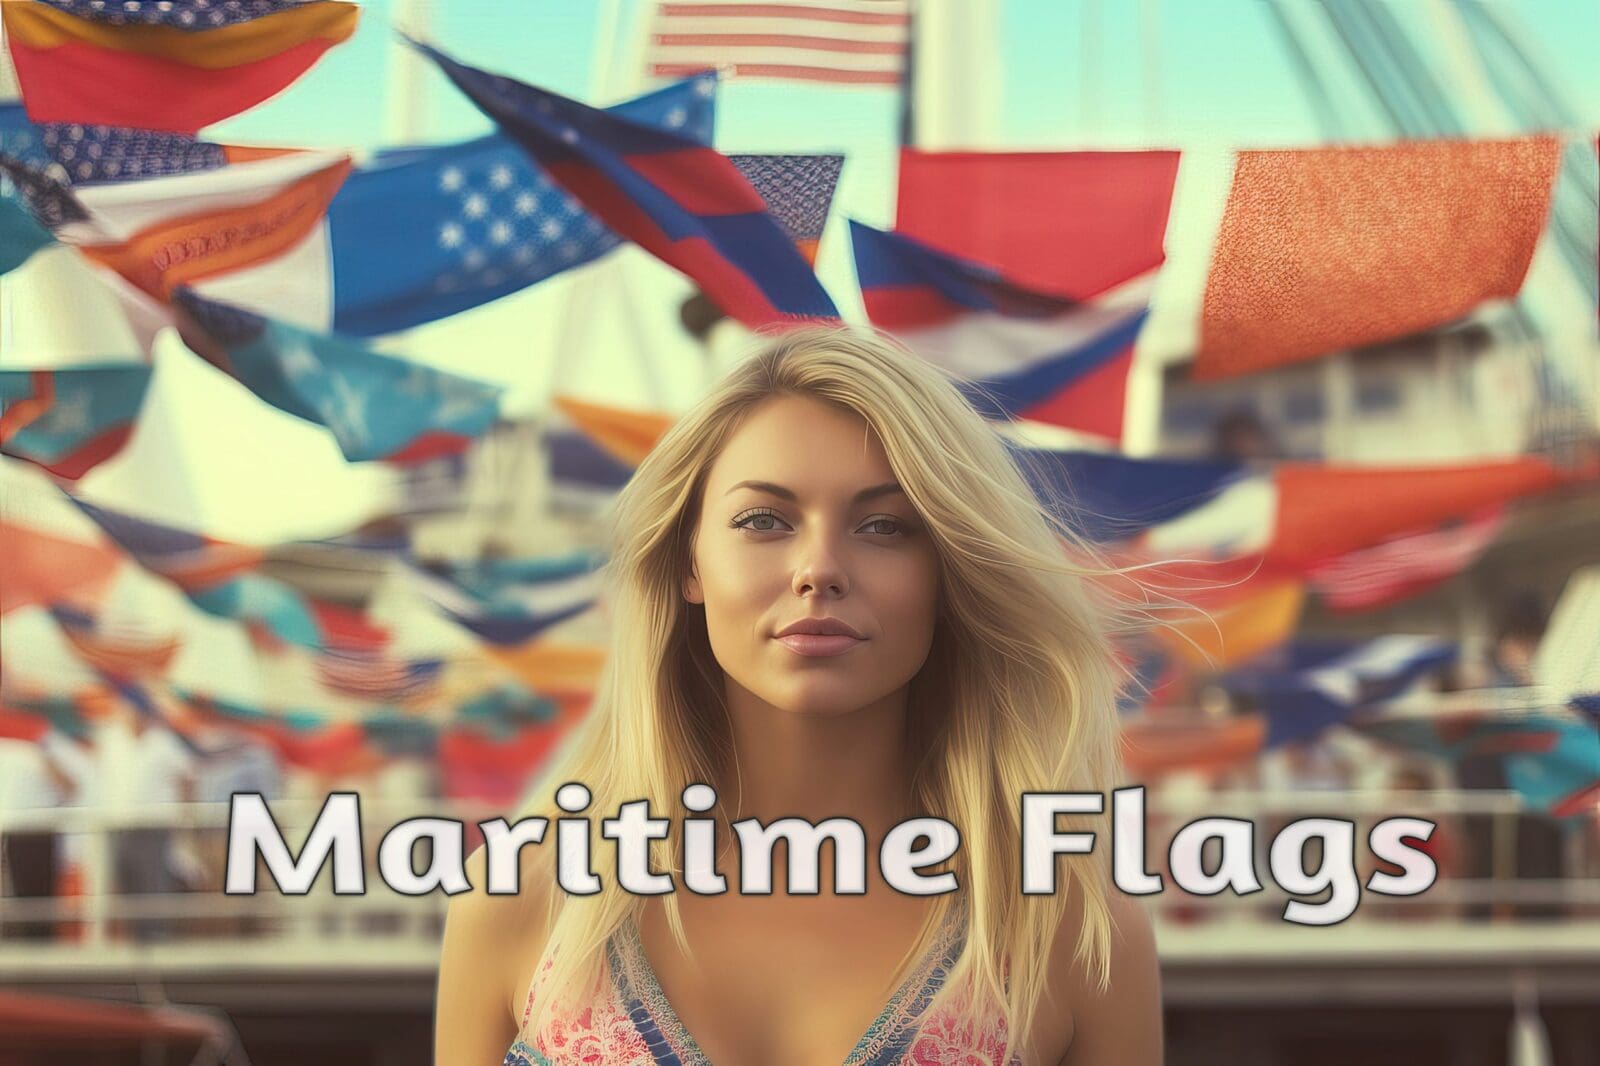 maritime-flag-american-flag-beach-lady-with-words